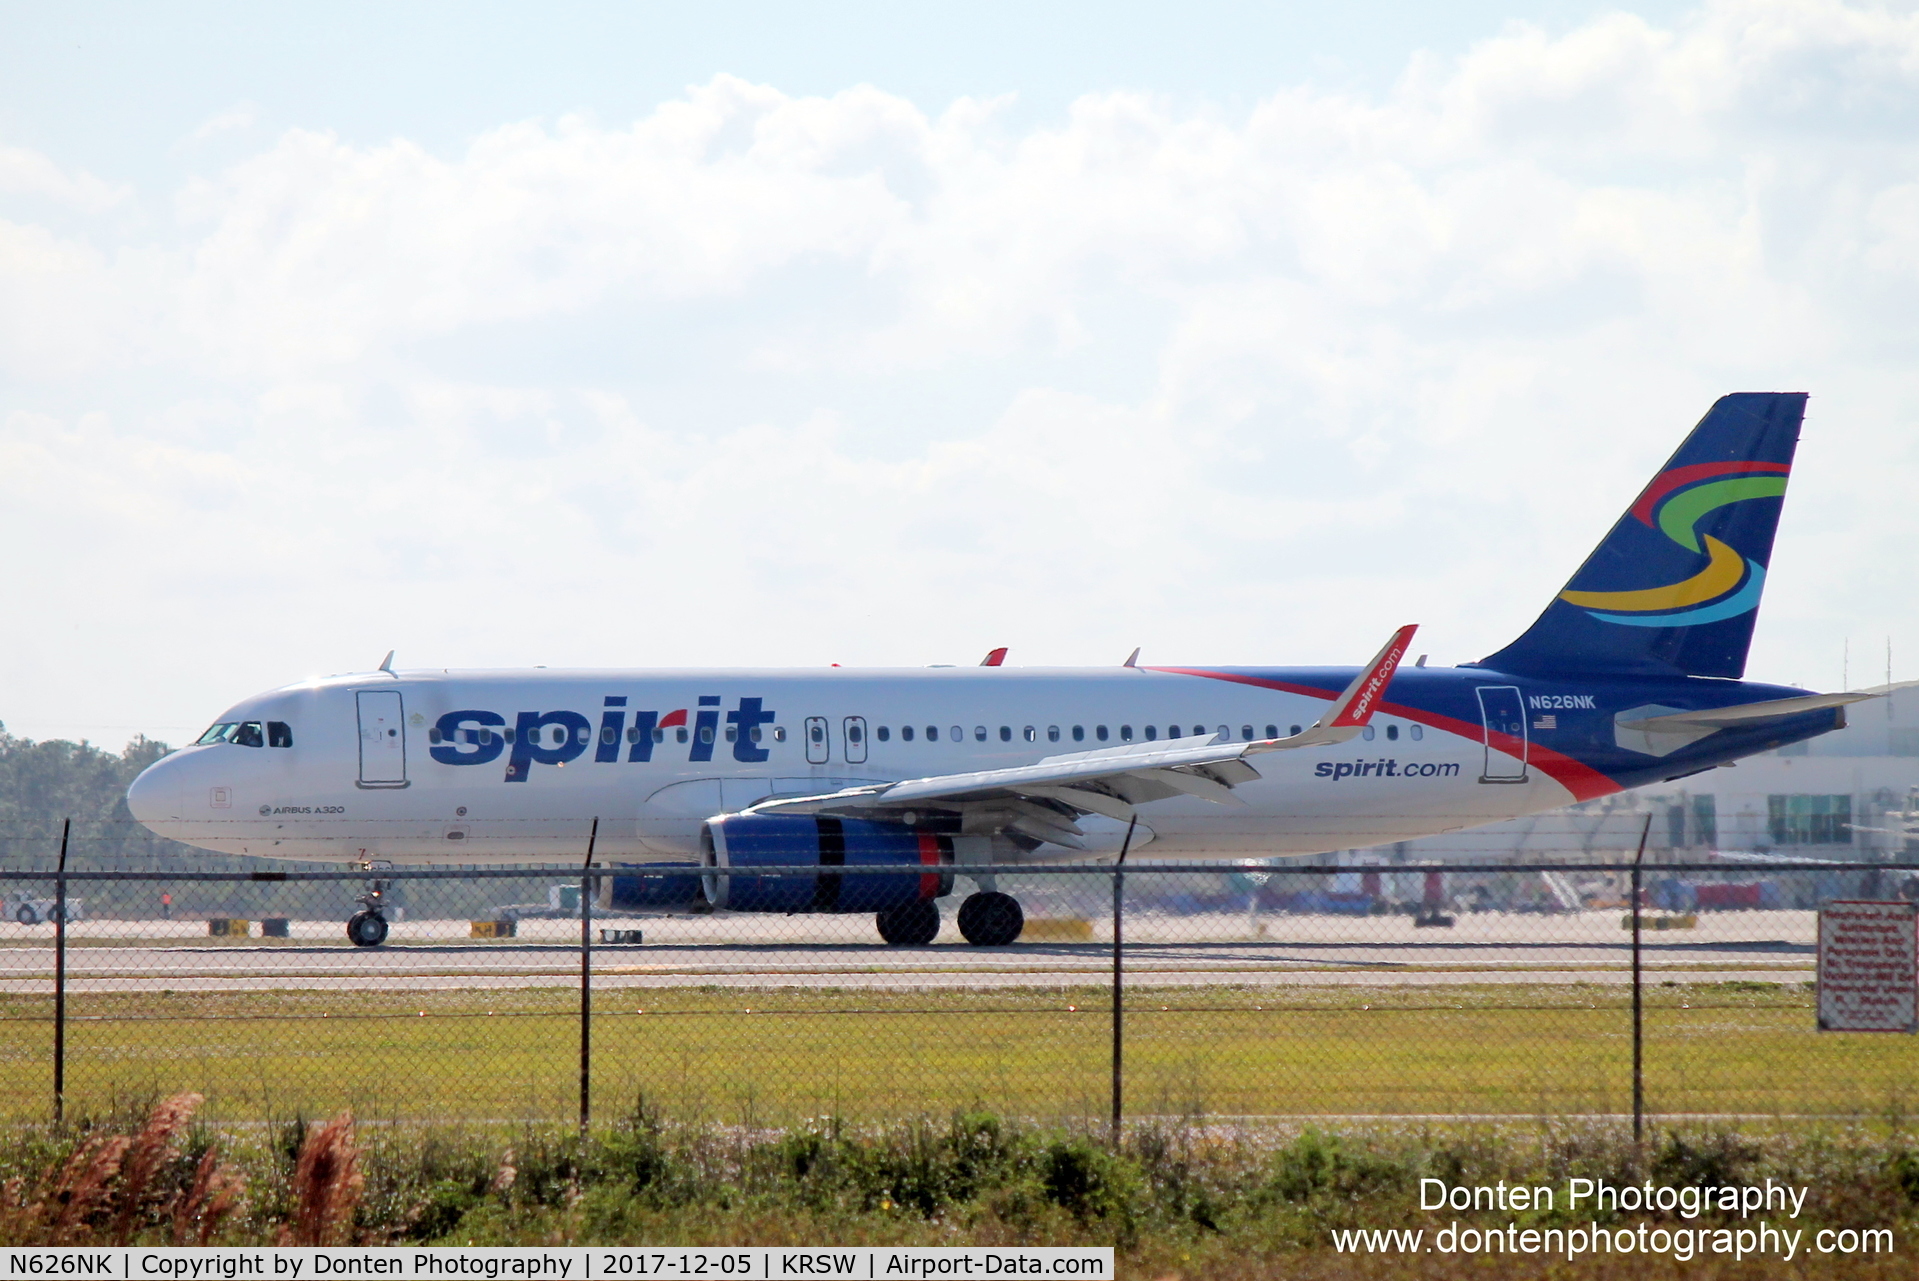 N626NK, 2014 Airbus A320-232 C/N 5999, Spirit Flight 937 (N626NK) arrives on Runway 6 at Southwest Florida International Airport following flight from Boston-Logan International Airport